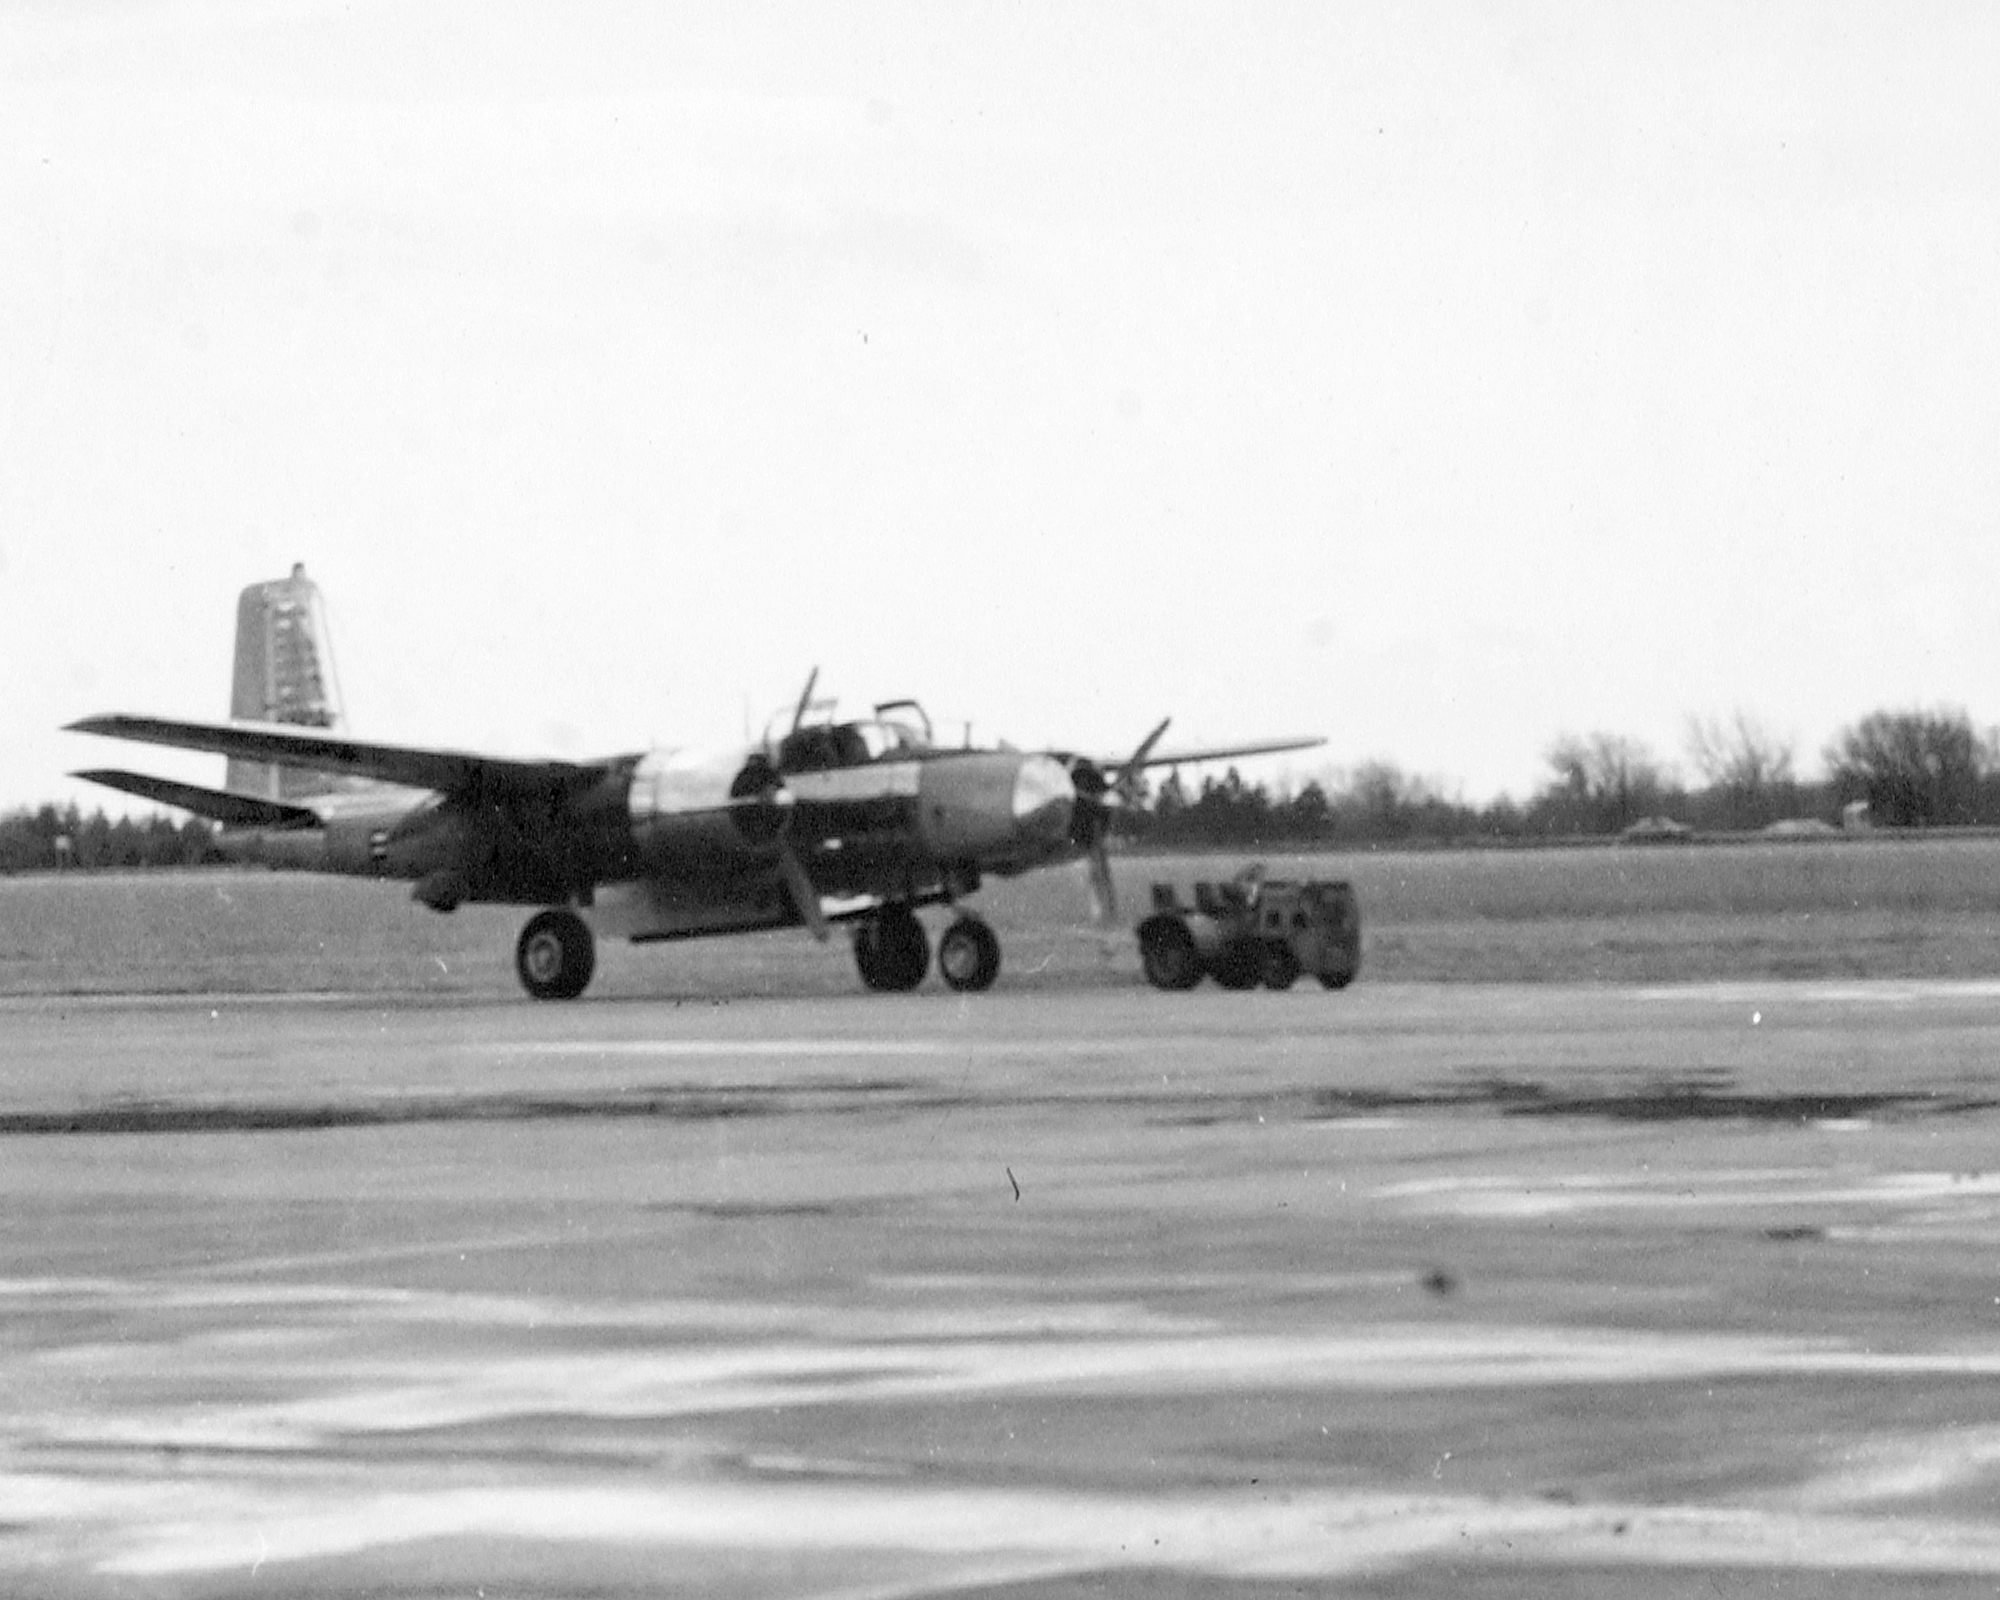 B-26 "Invader" flown from 1947 - 1951